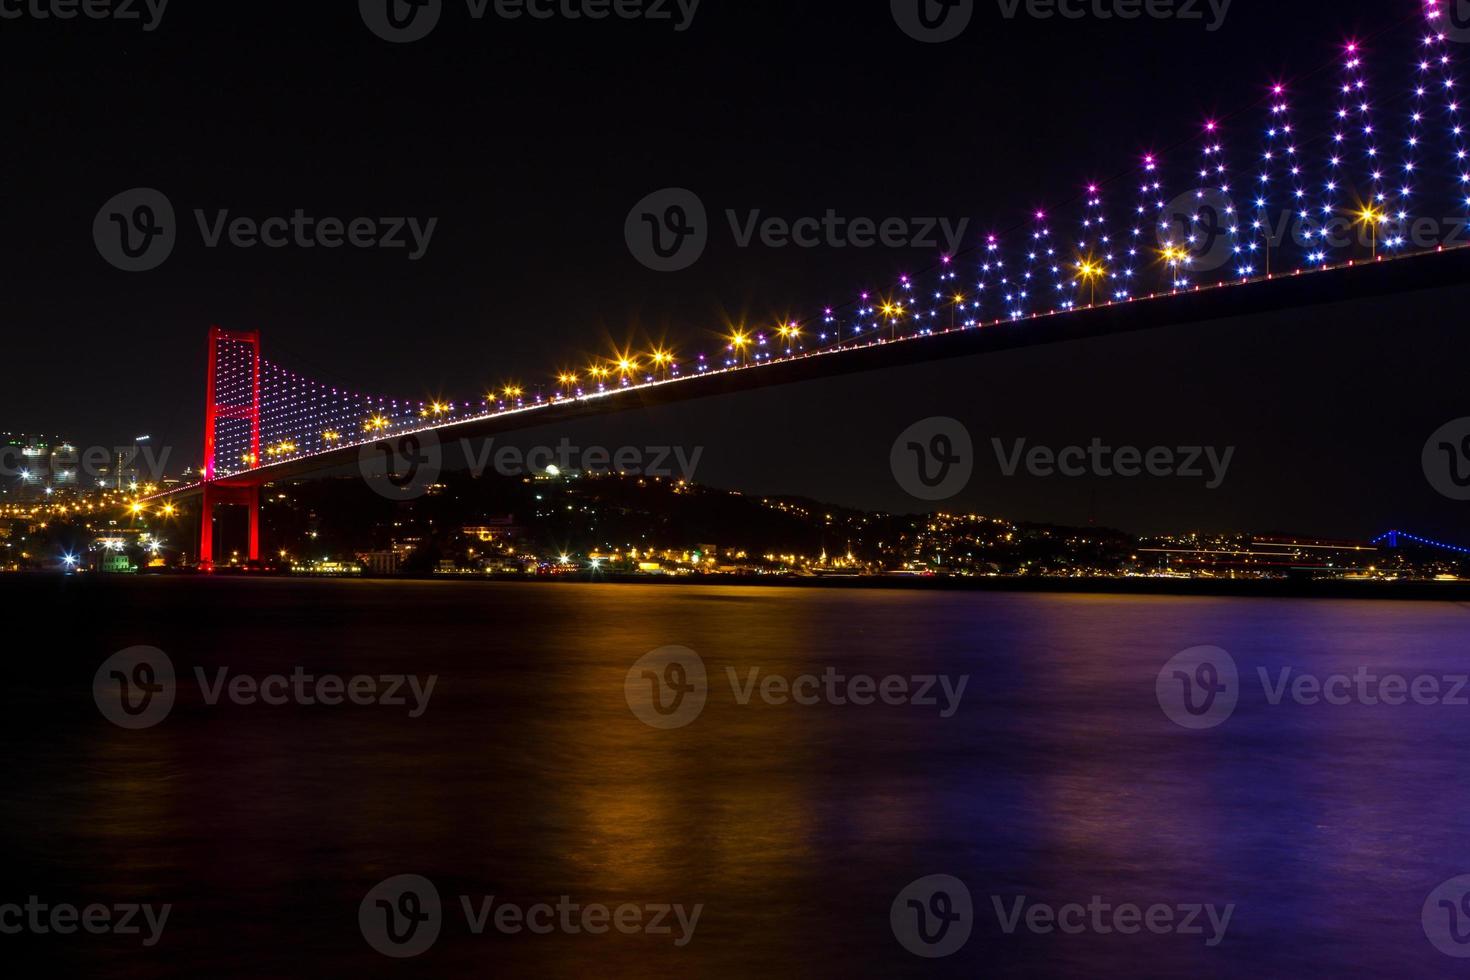 Bosphorus Bridge from Istanbul, Turkey photo